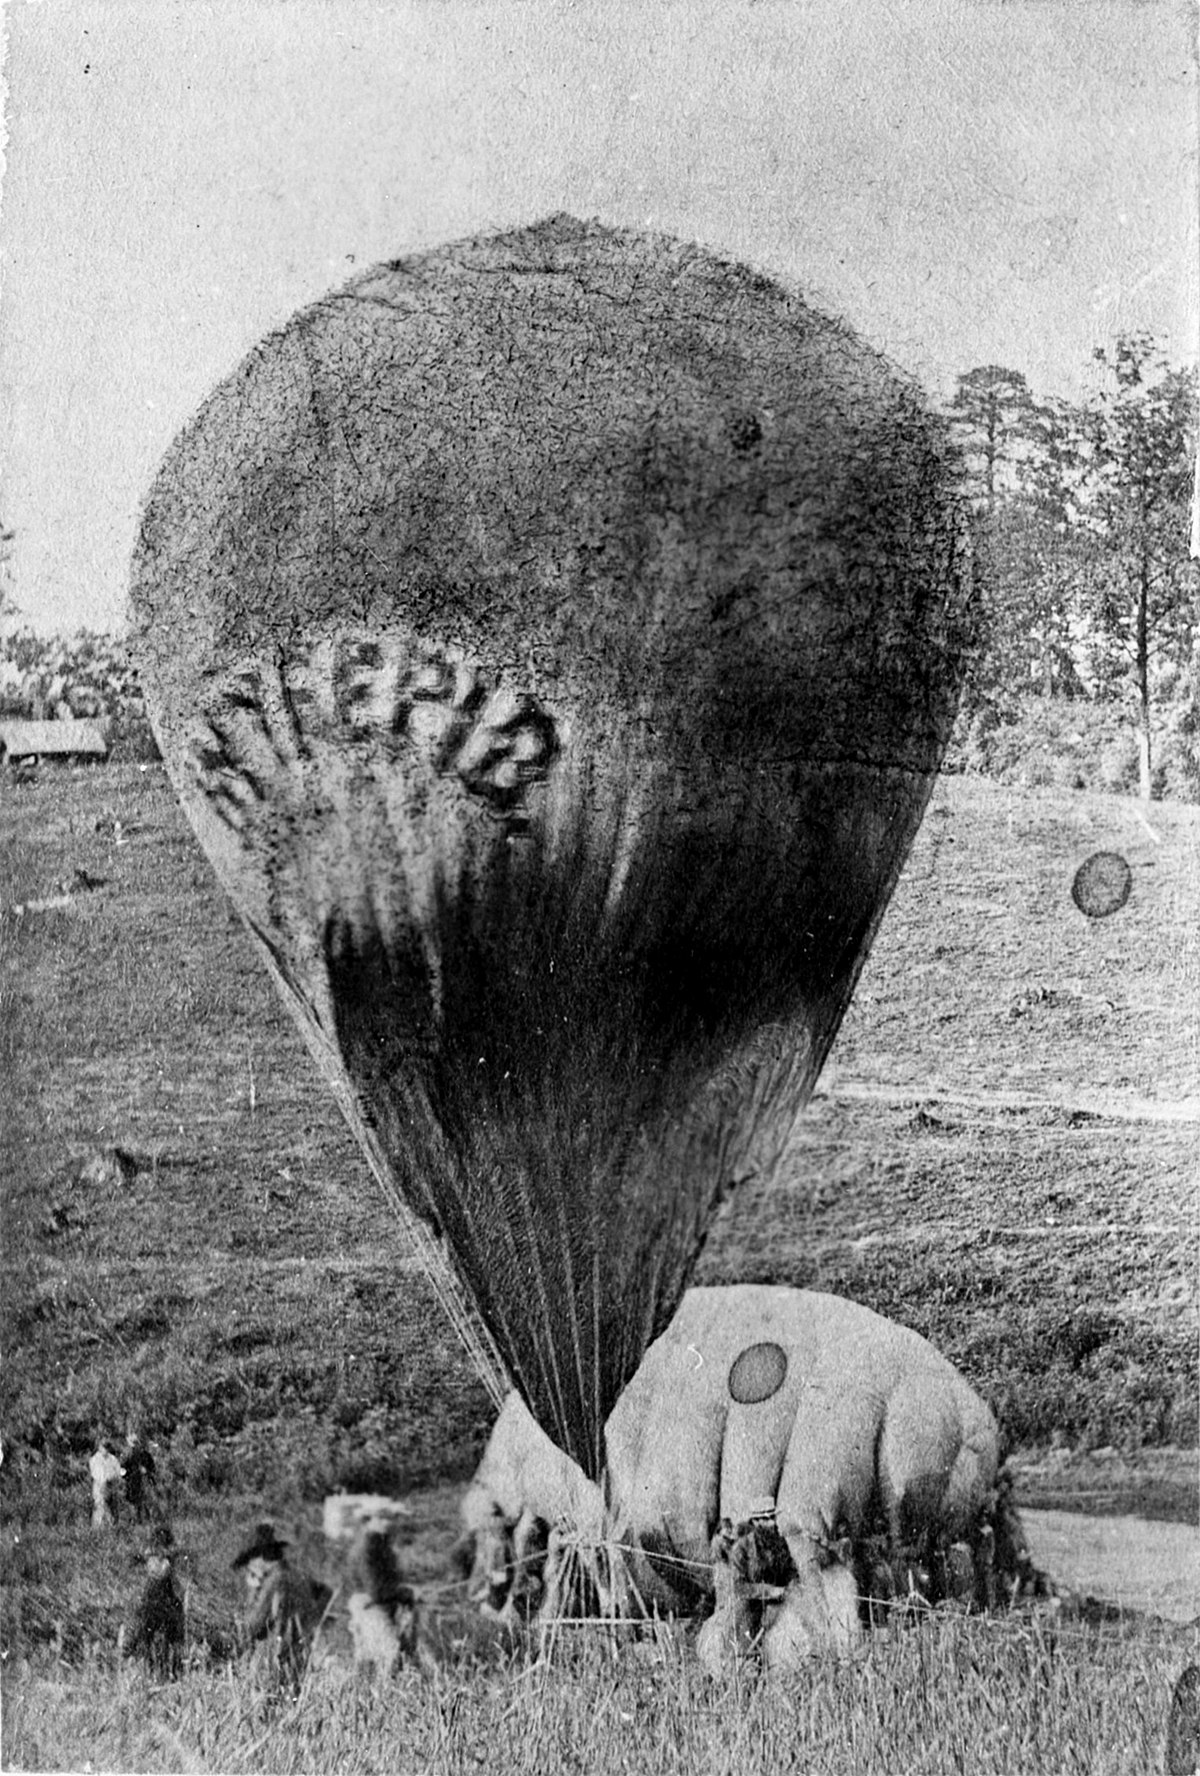 Hot air balloon - Wikipedia